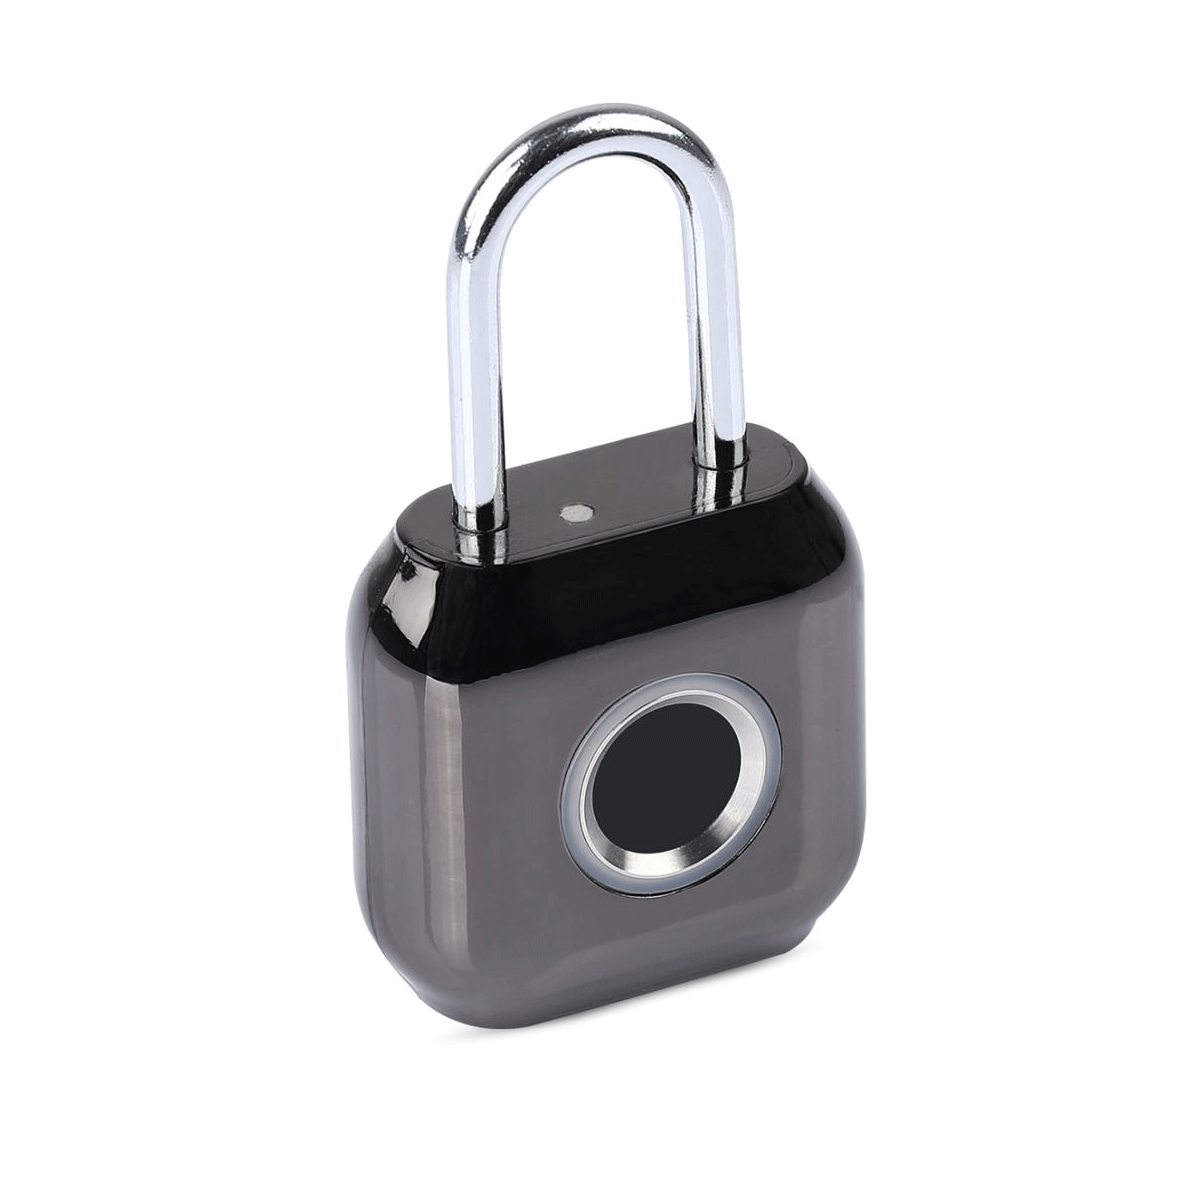 Portronics Biolock Fingerprint Padlock, Smart Lock With USB Charging Cable